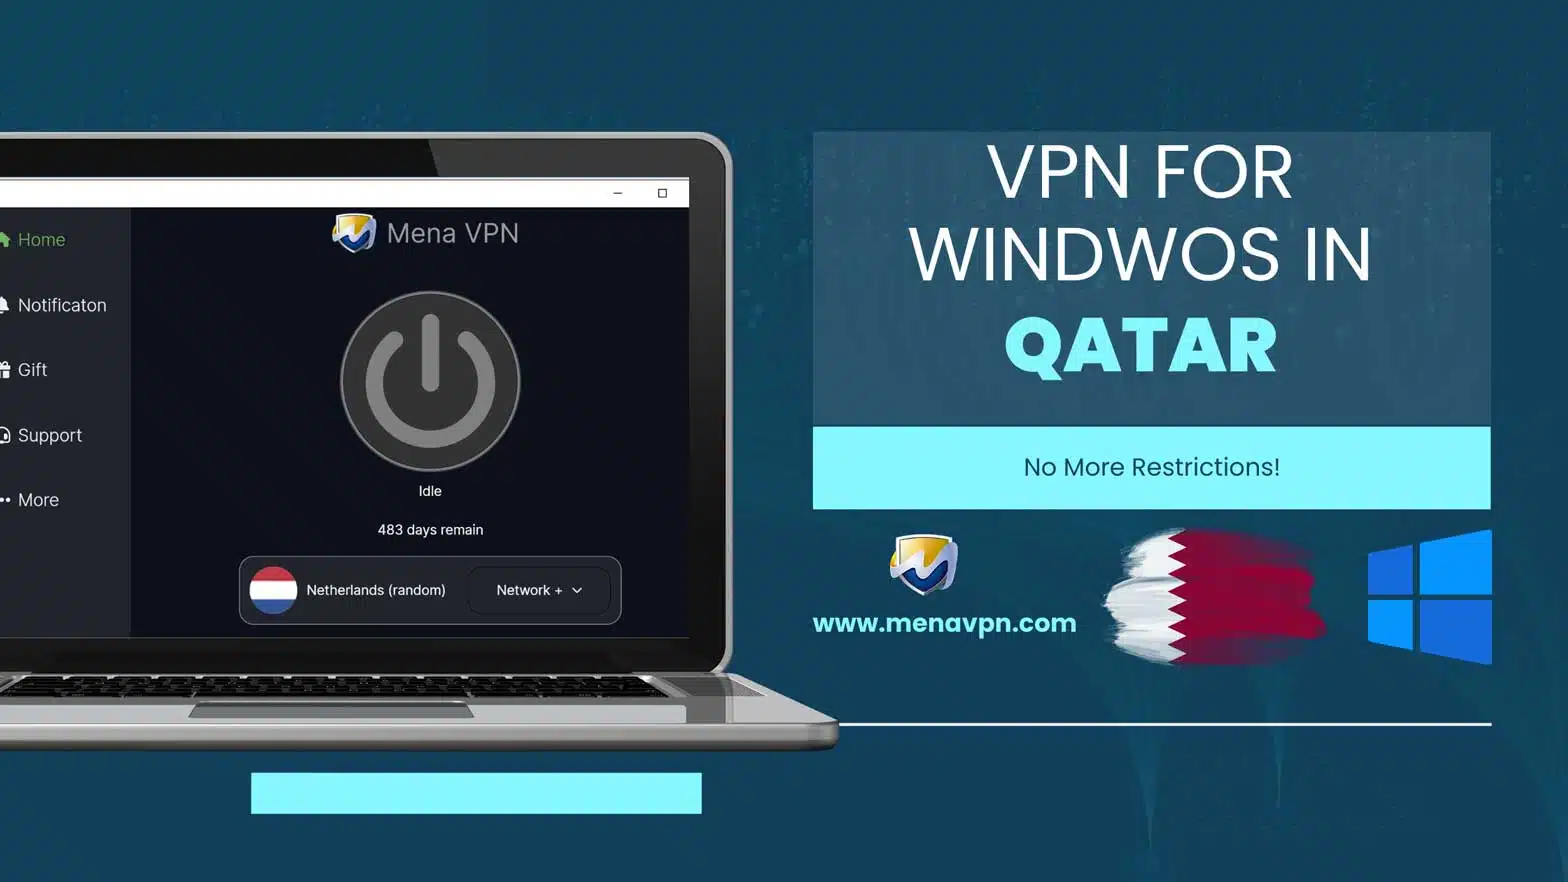 VPN for windows in Qatar